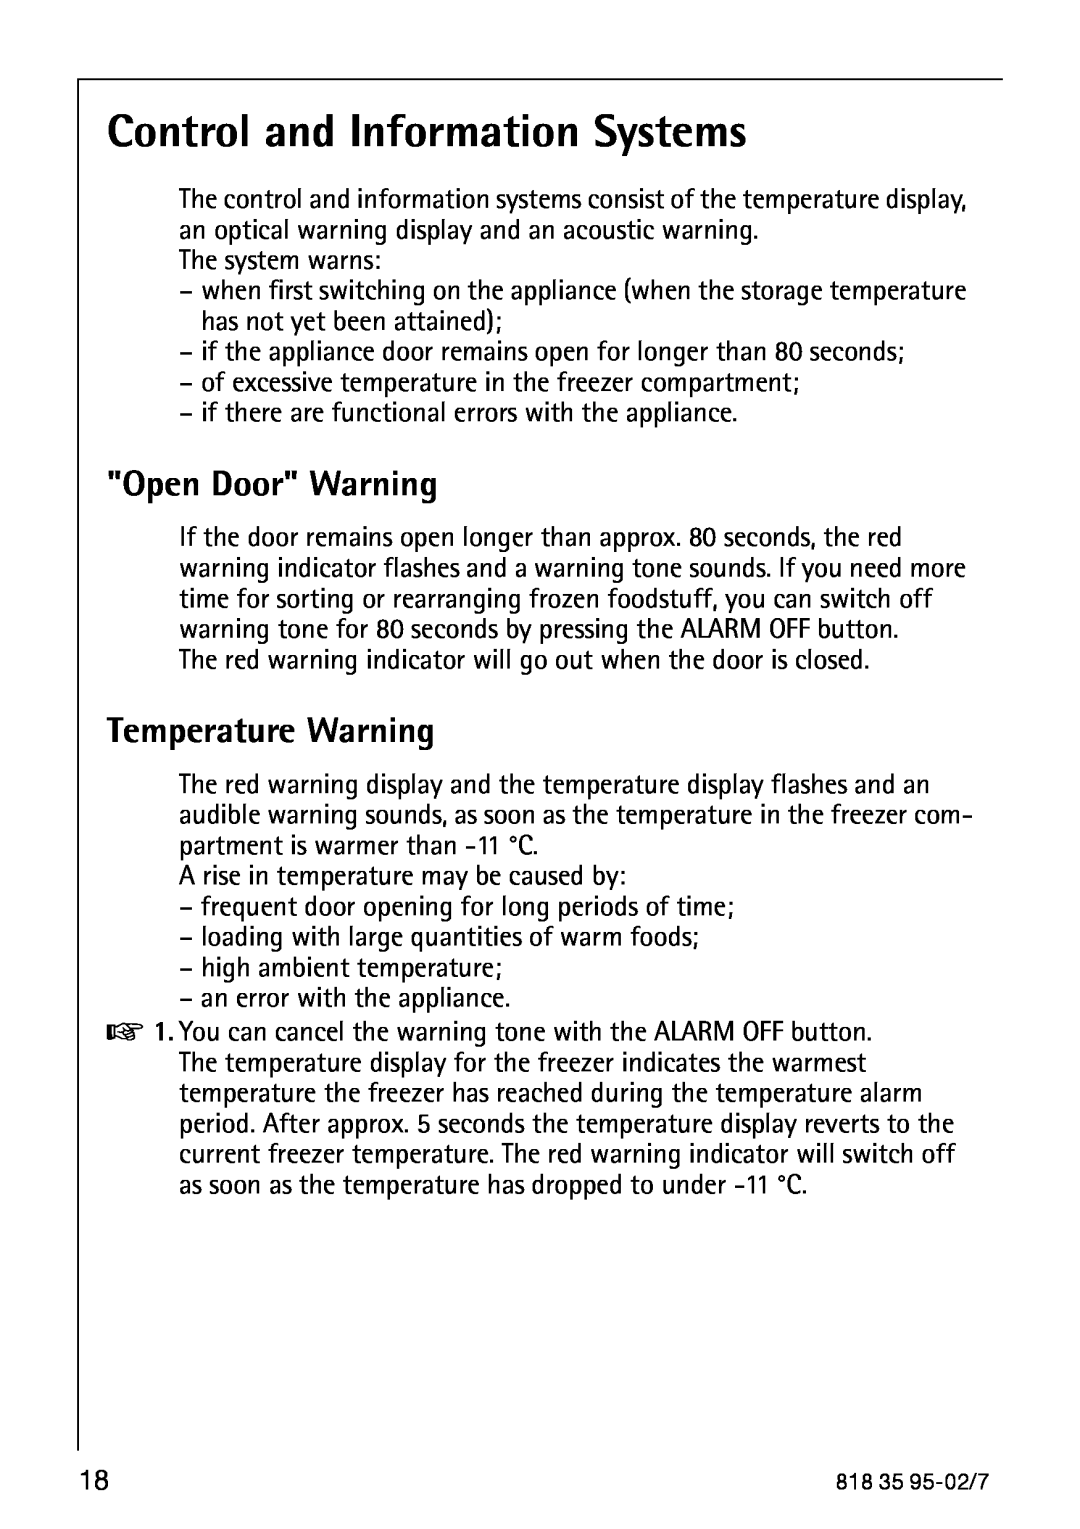 AEG 75248 GA3 manual Control and Information Systems, Open Door Warning, Temperature Warning 